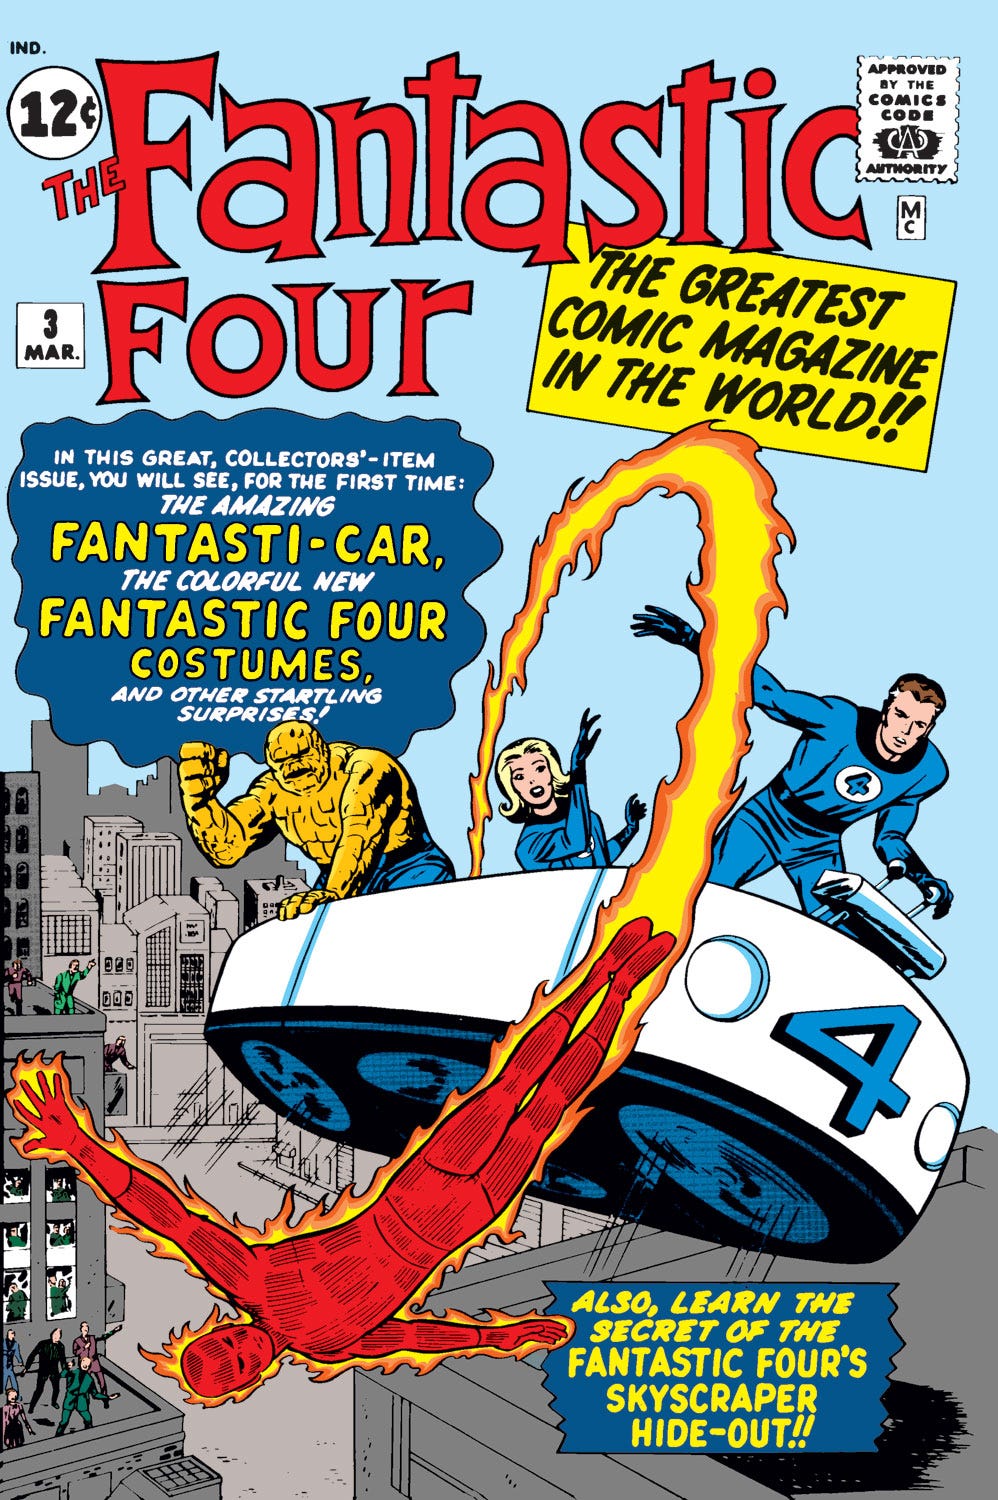 Fantastic Four (1961) #3 | Comic Issues | Marvel